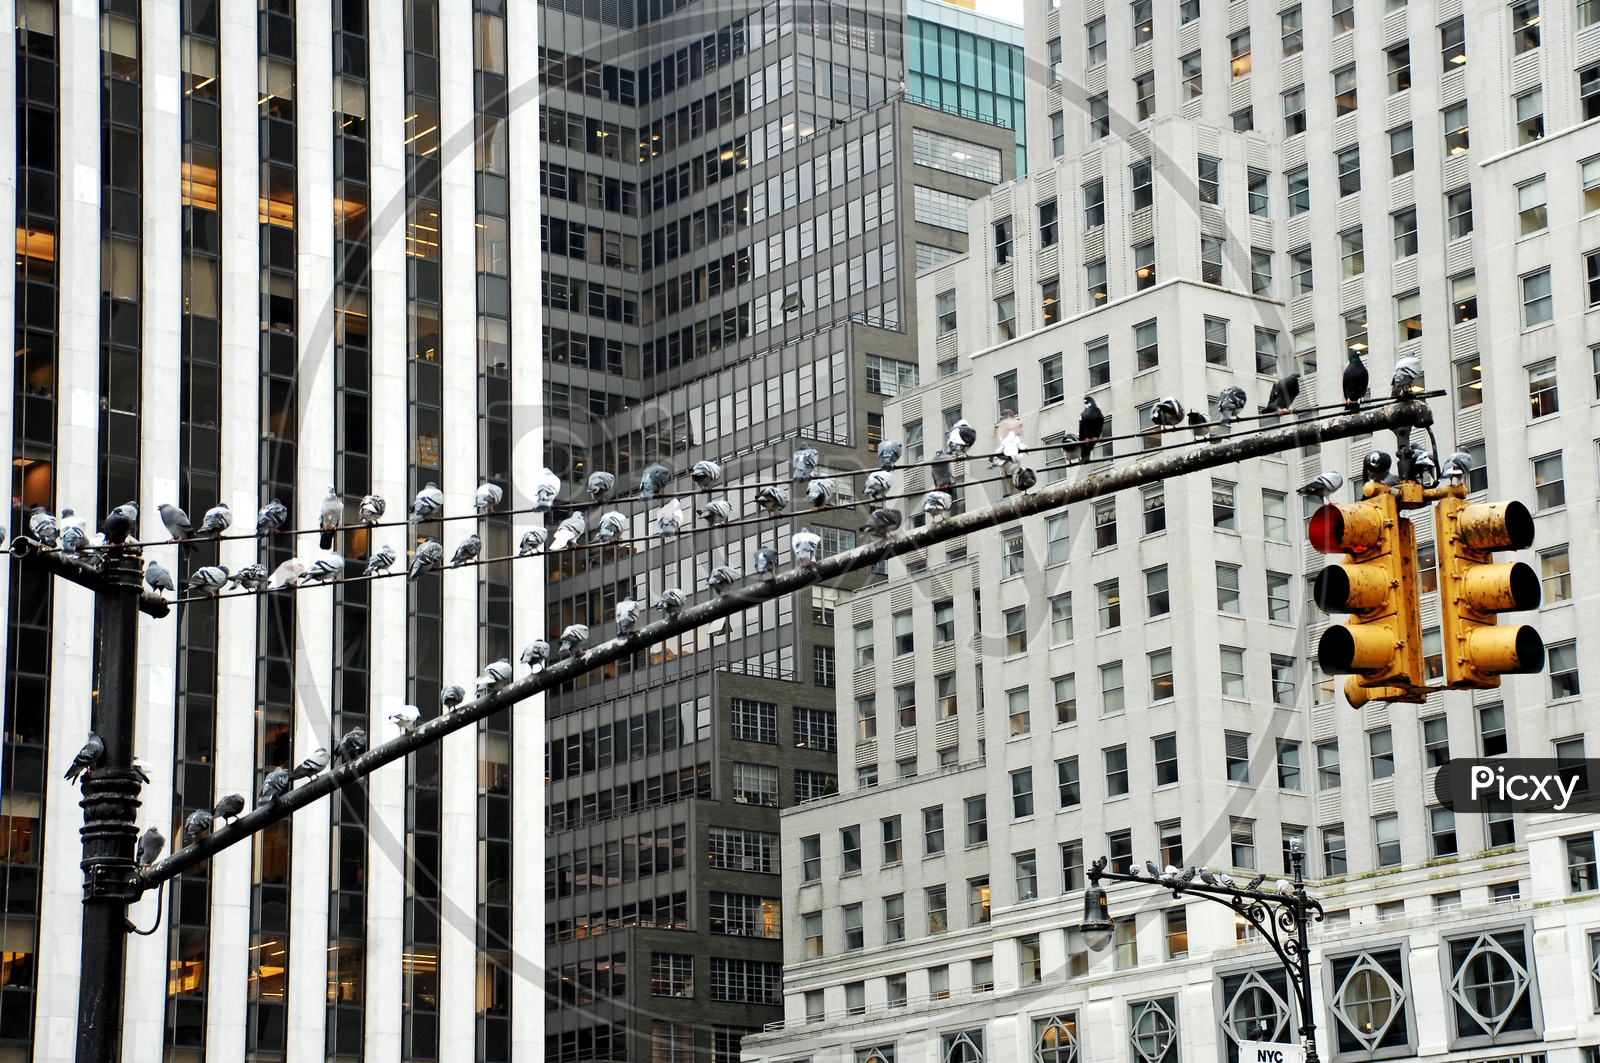 Pigeons on the street lights